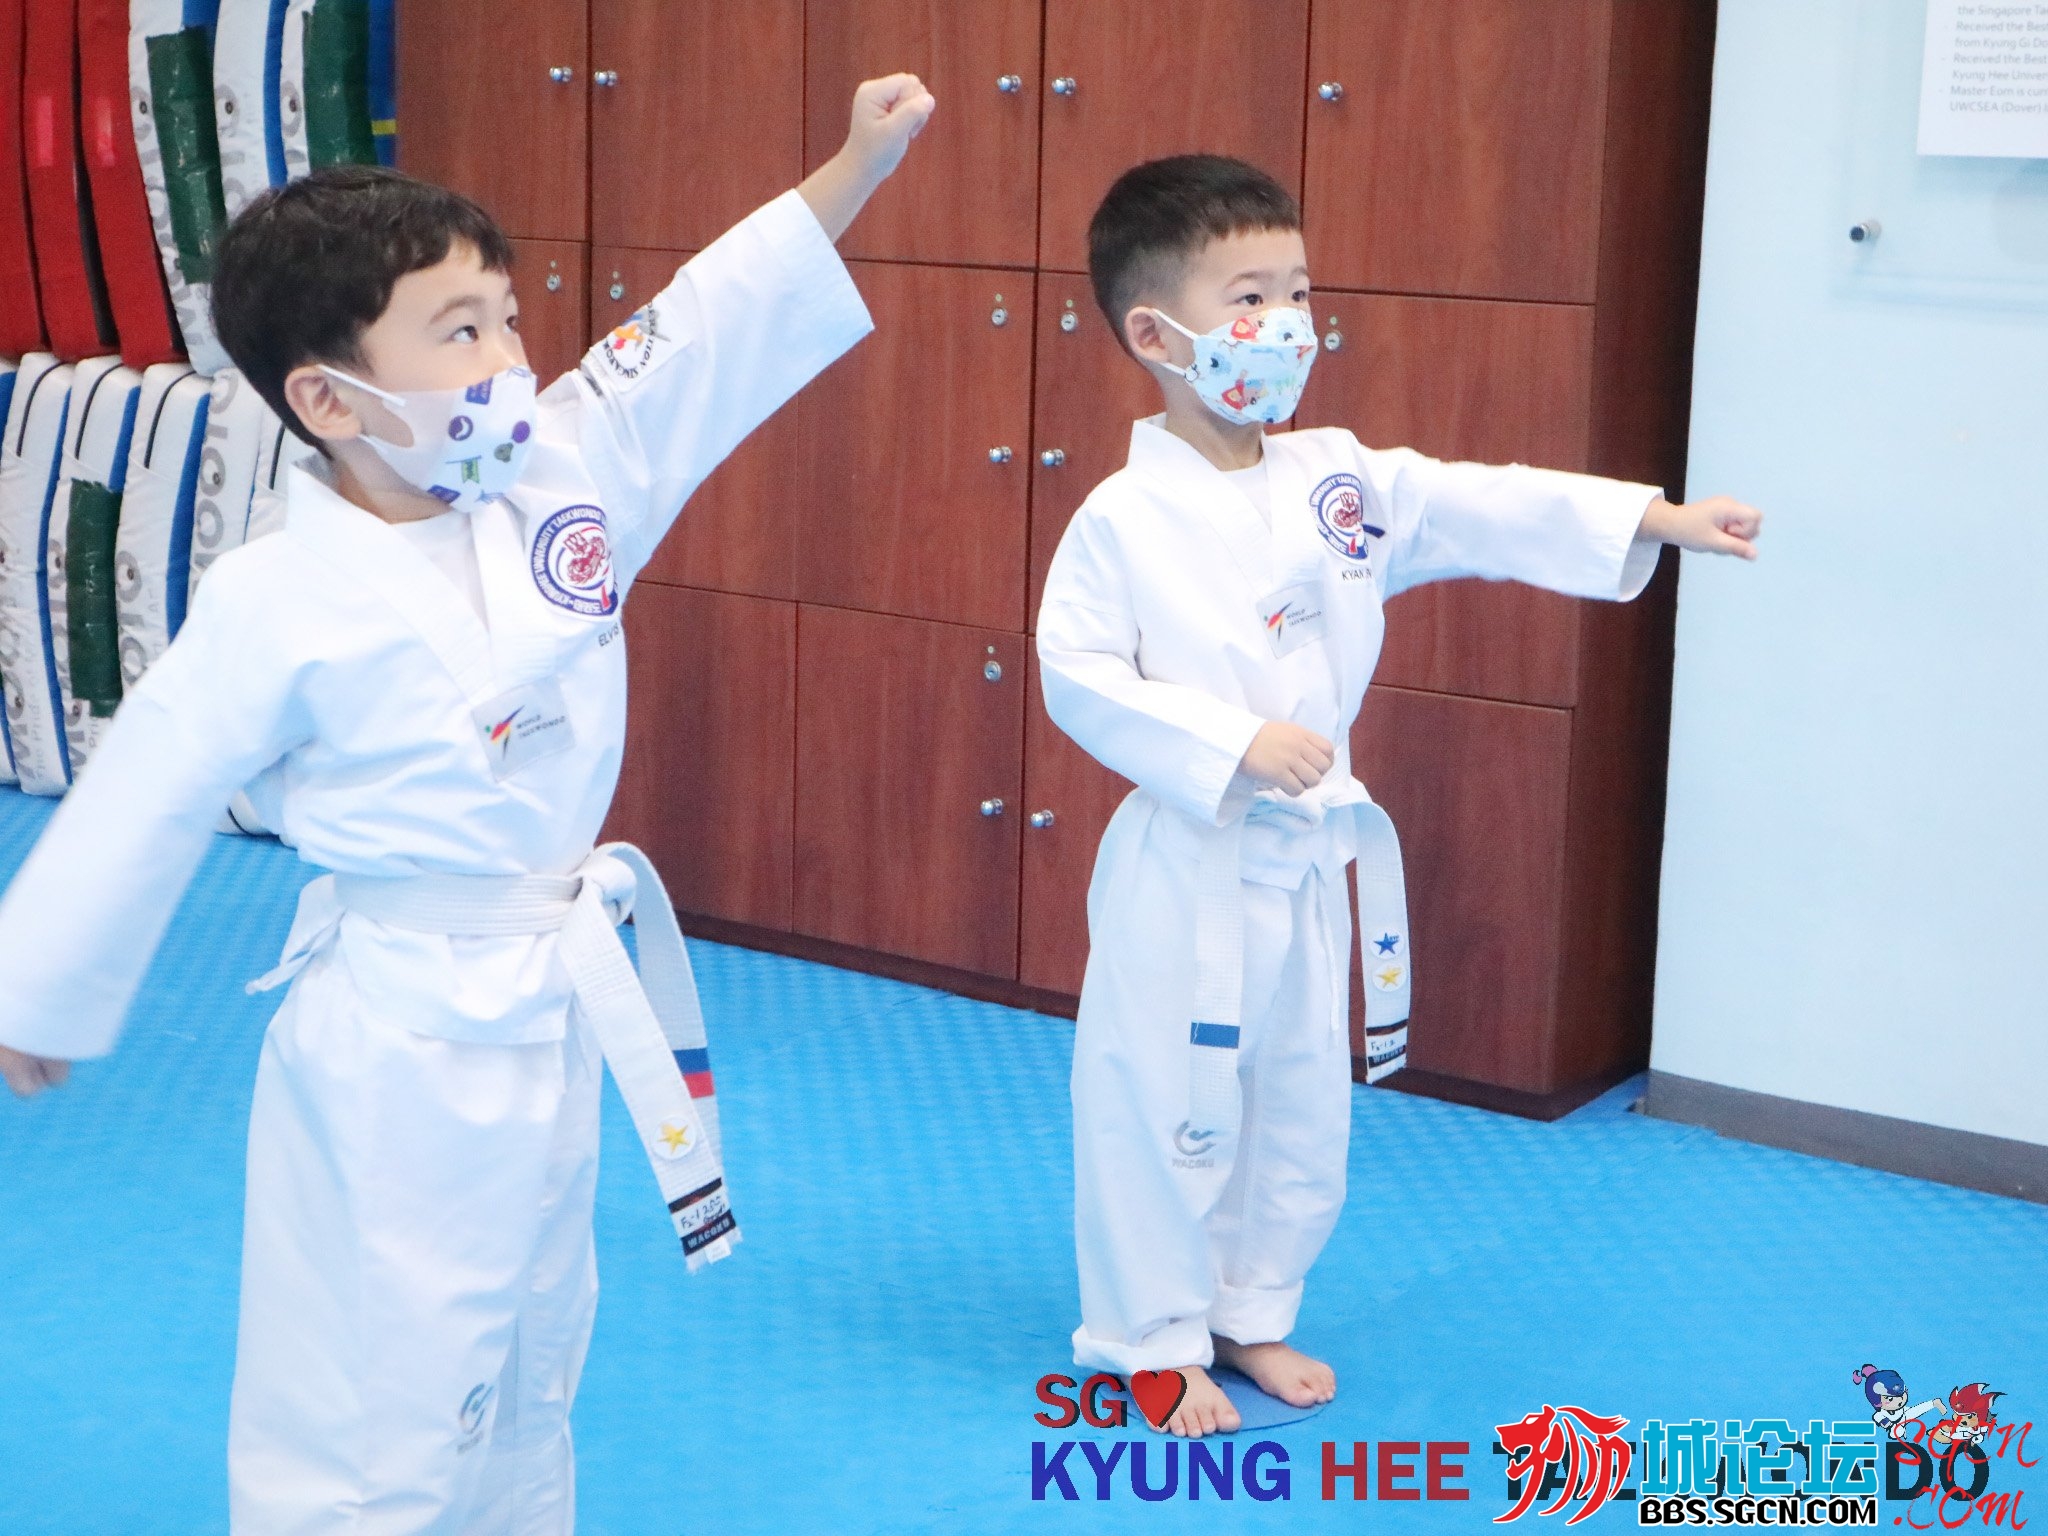 Kyunghee Taekwondo 2o.jpg